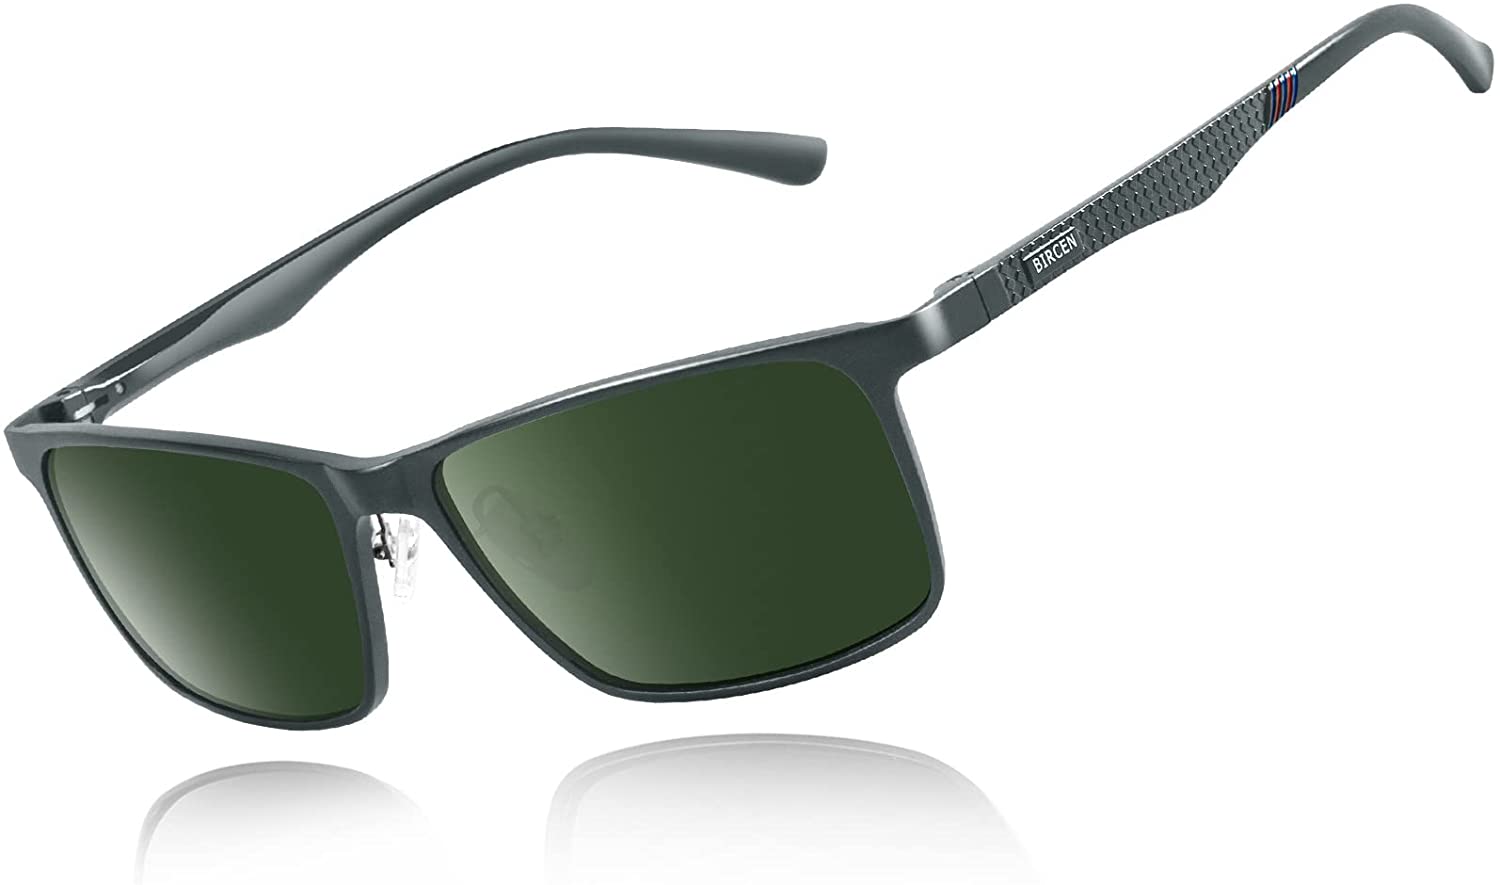 BIRCEN Mens Sunglasses Polarized UV Protection: Classic Shades for